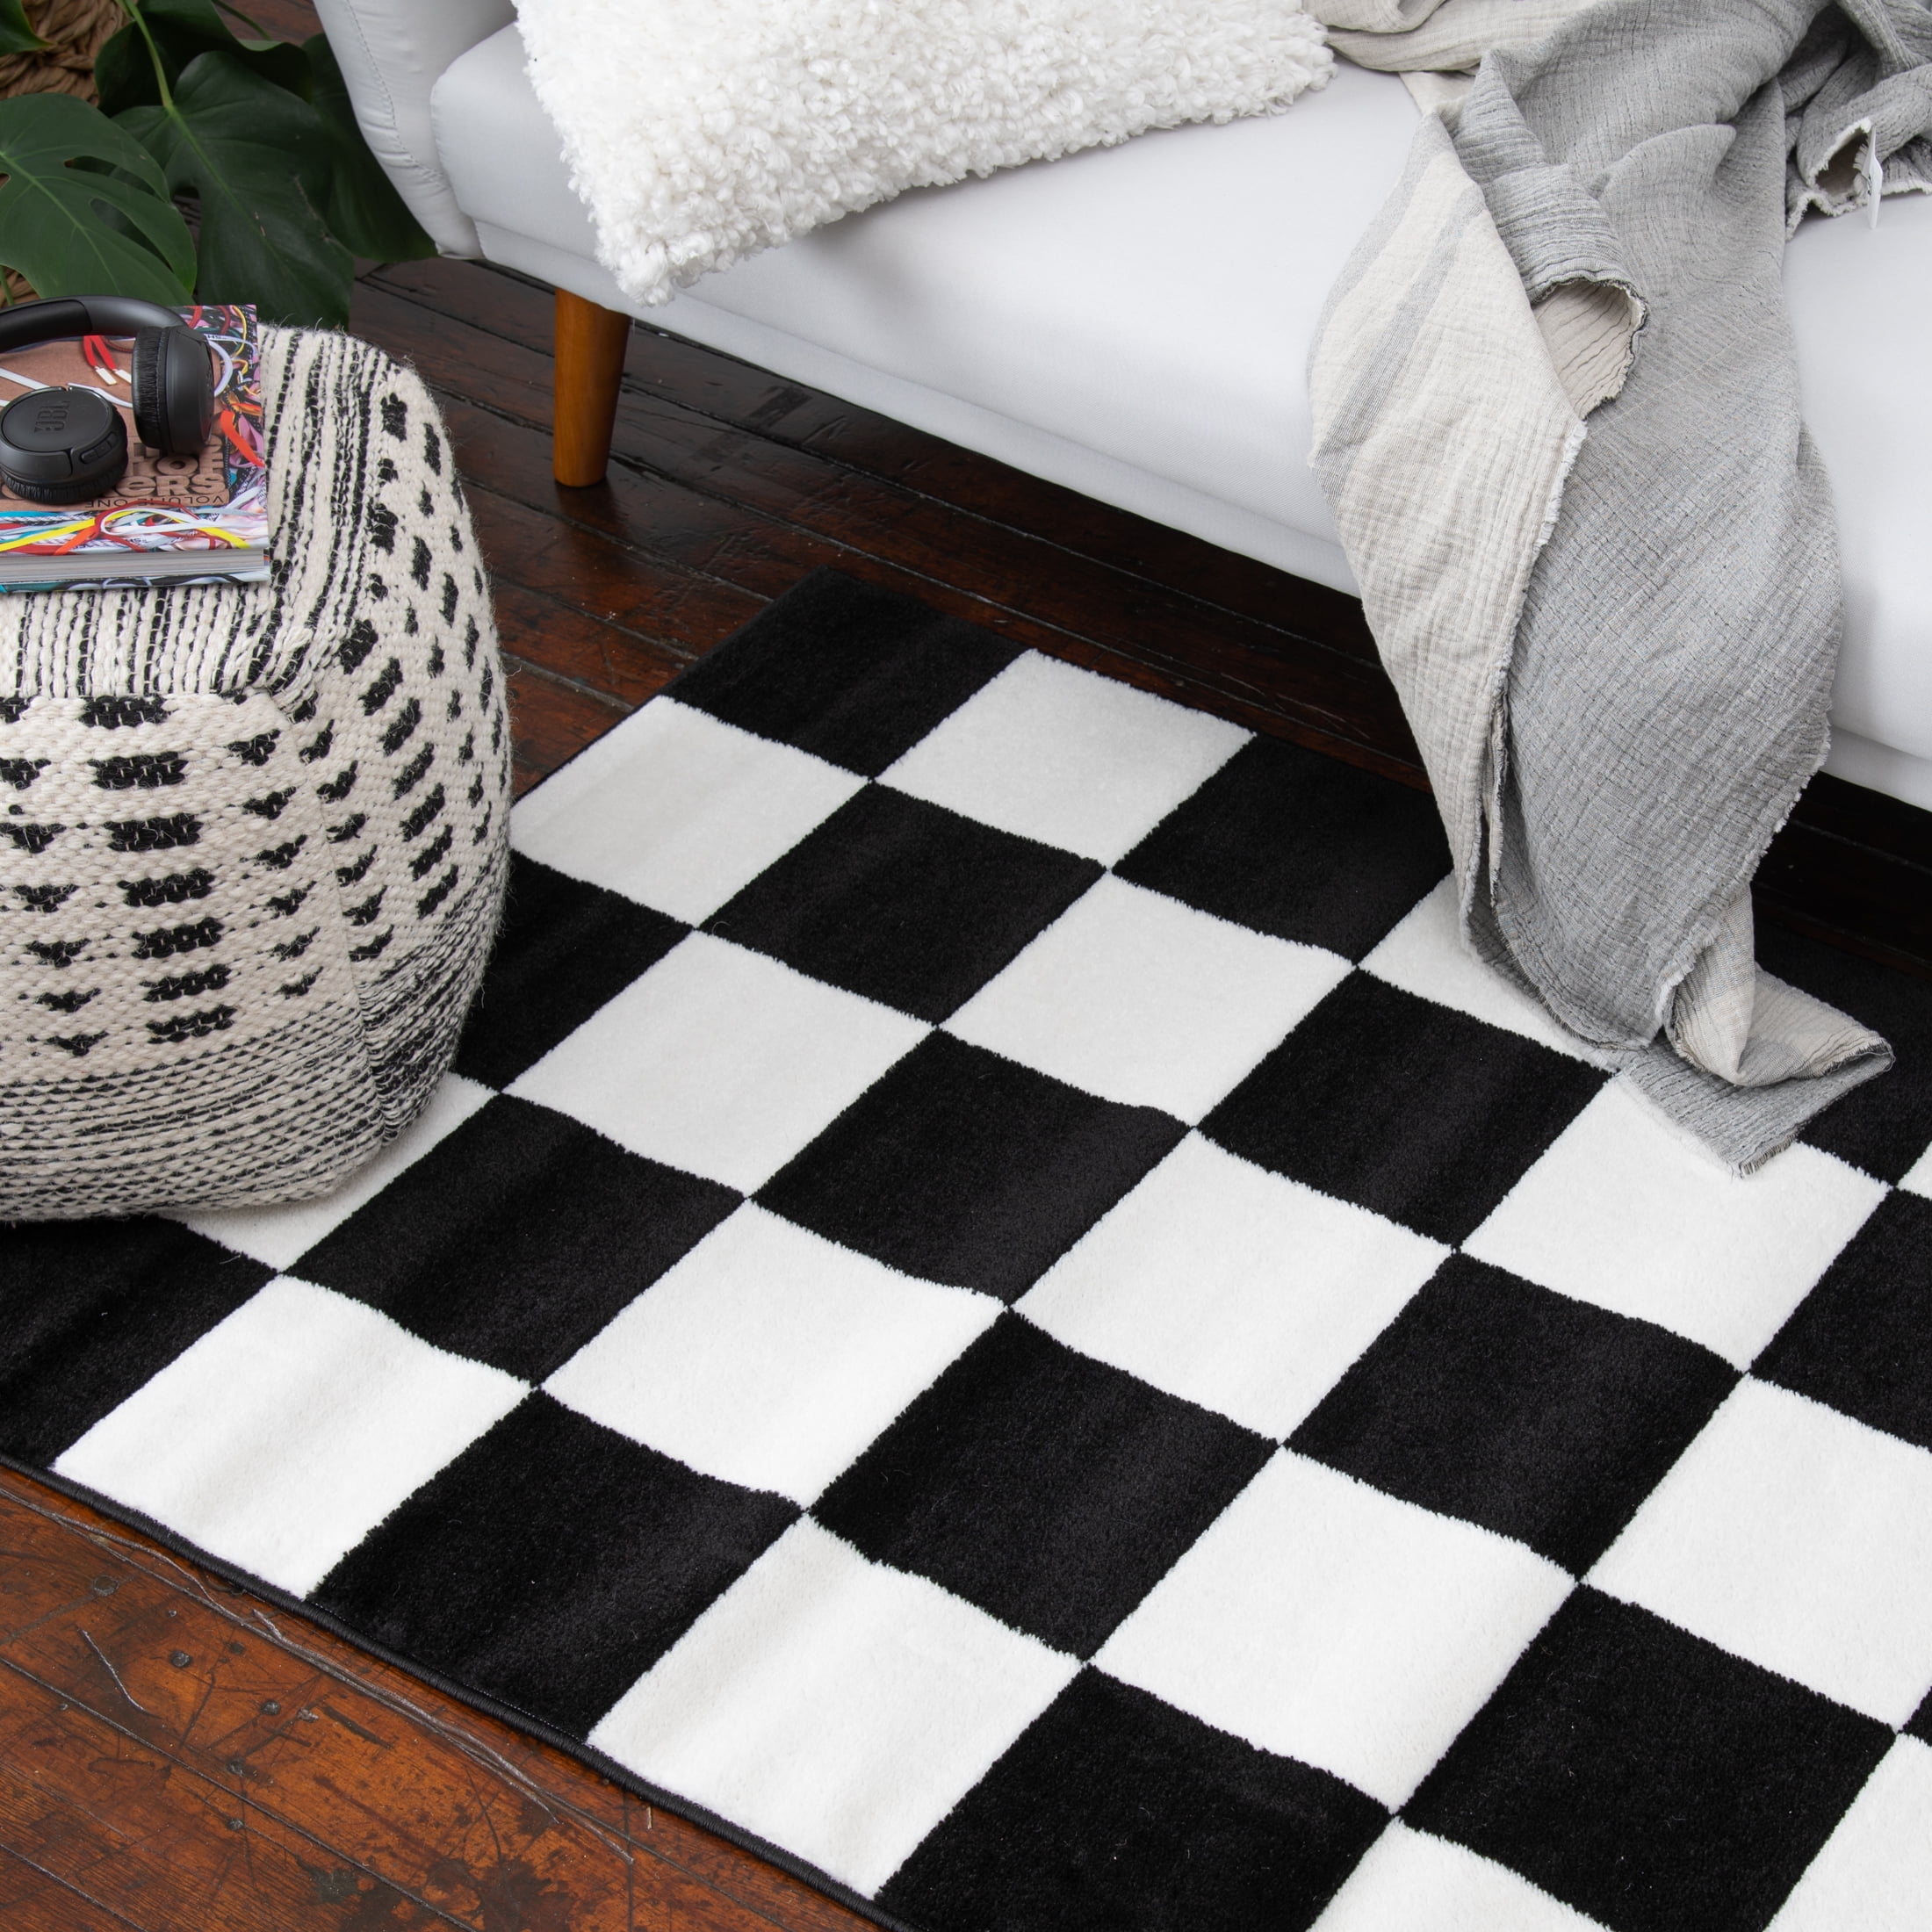 Mainstays 3'3 x 5'5 Black White Checkered Dorm Room Indoor